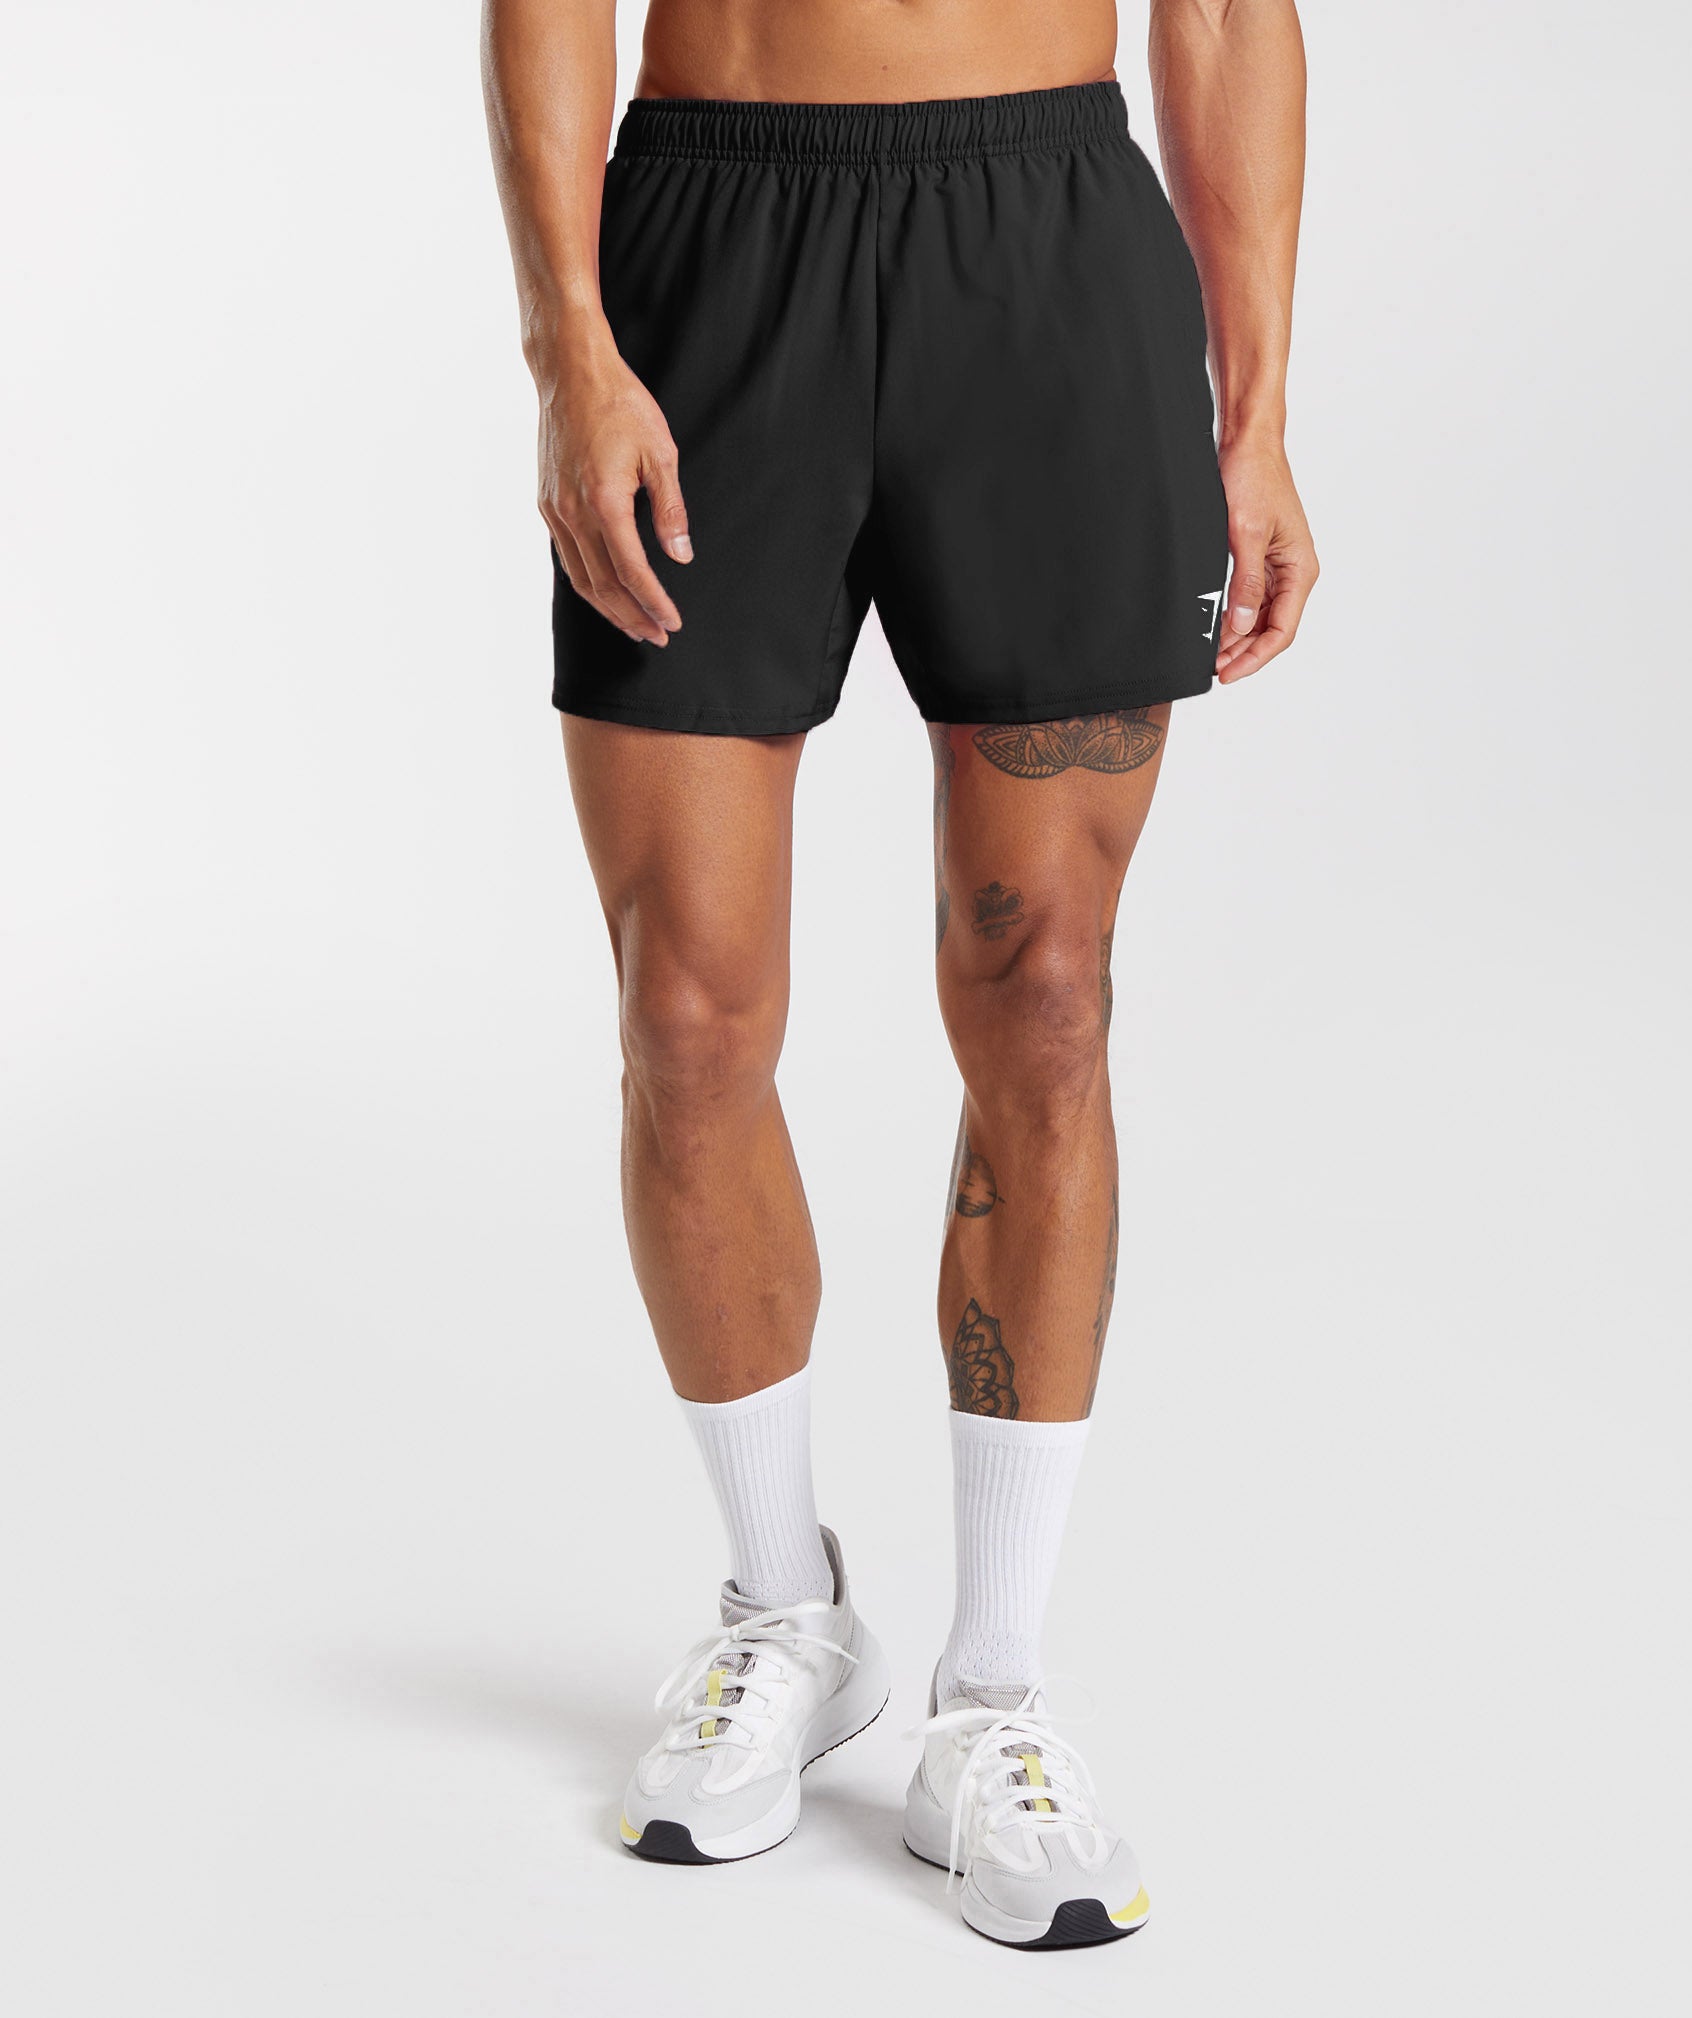 Top 5-inch men's shorts: Vuori, Columbia, J.Crew, Todd Snyder